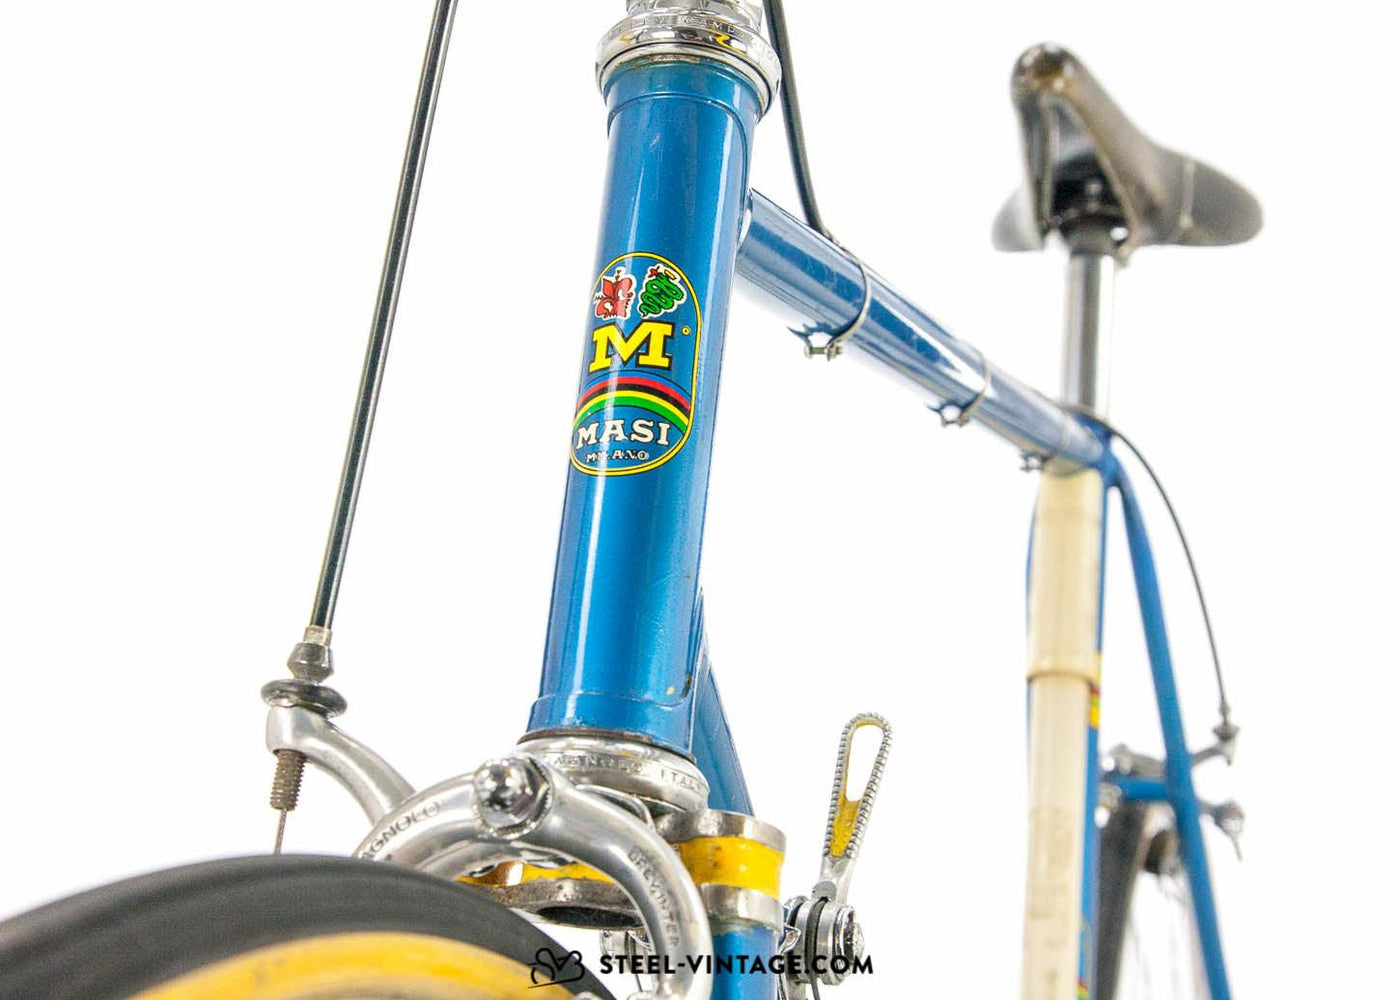 Masi Gran Criterium Classic Road Bike 1974 - Steel Vintage Bikes